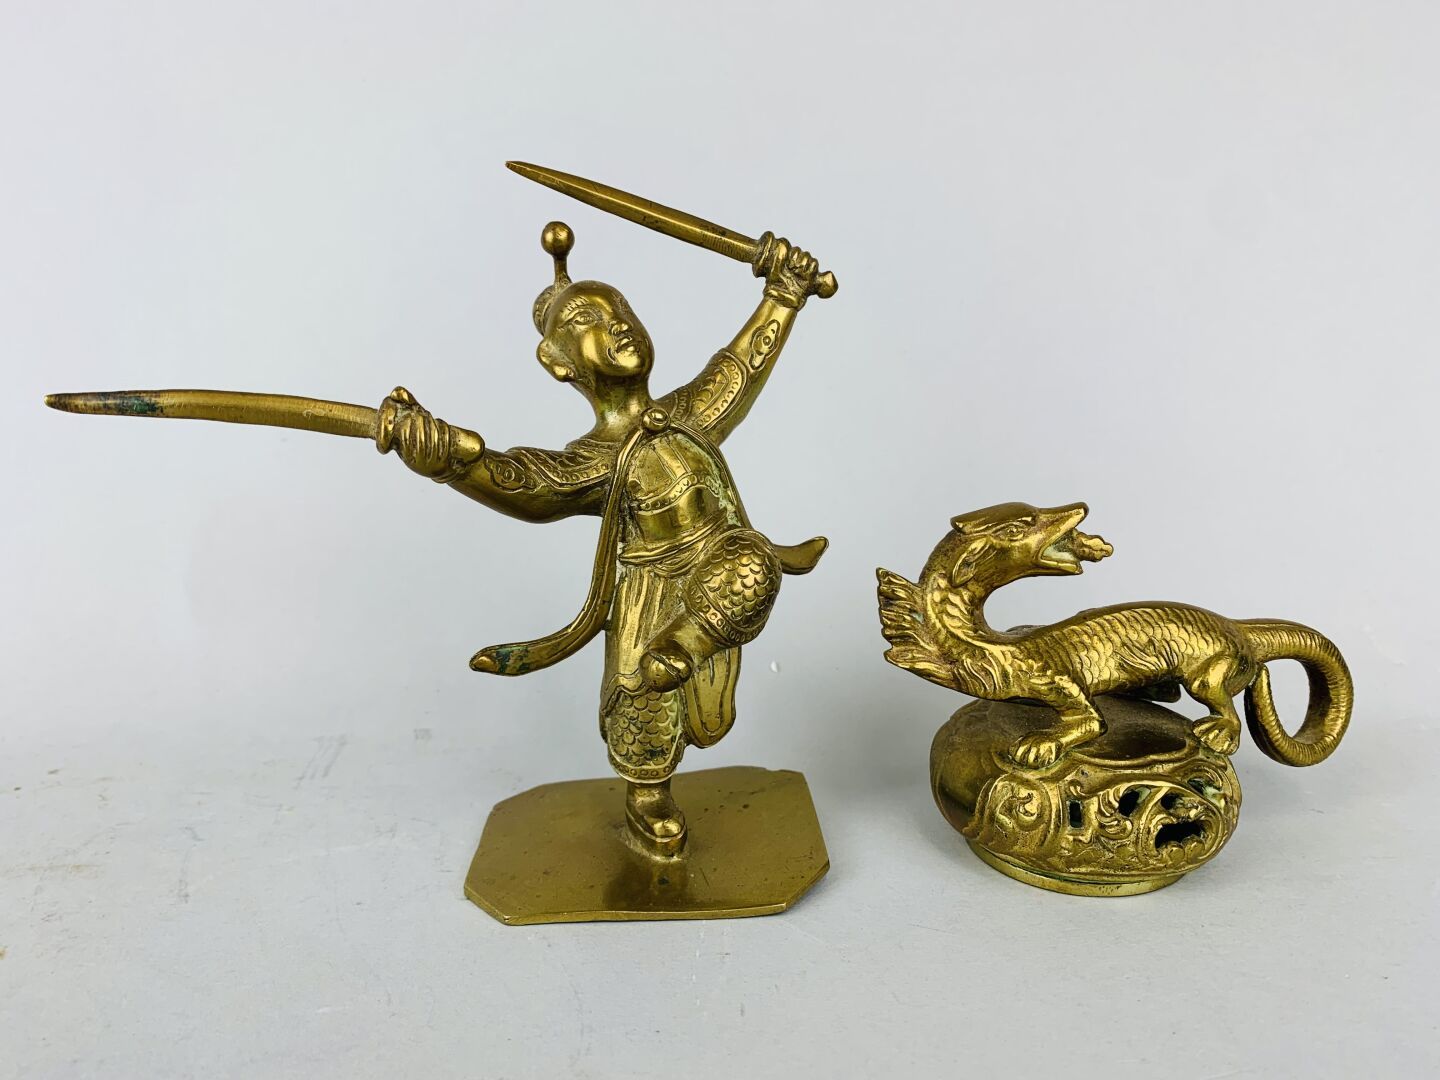 Null 中国。小型青铜火炉与龙（高：7厘米）和青铜勇士雕像。高度：15厘米（剑有点变形）。